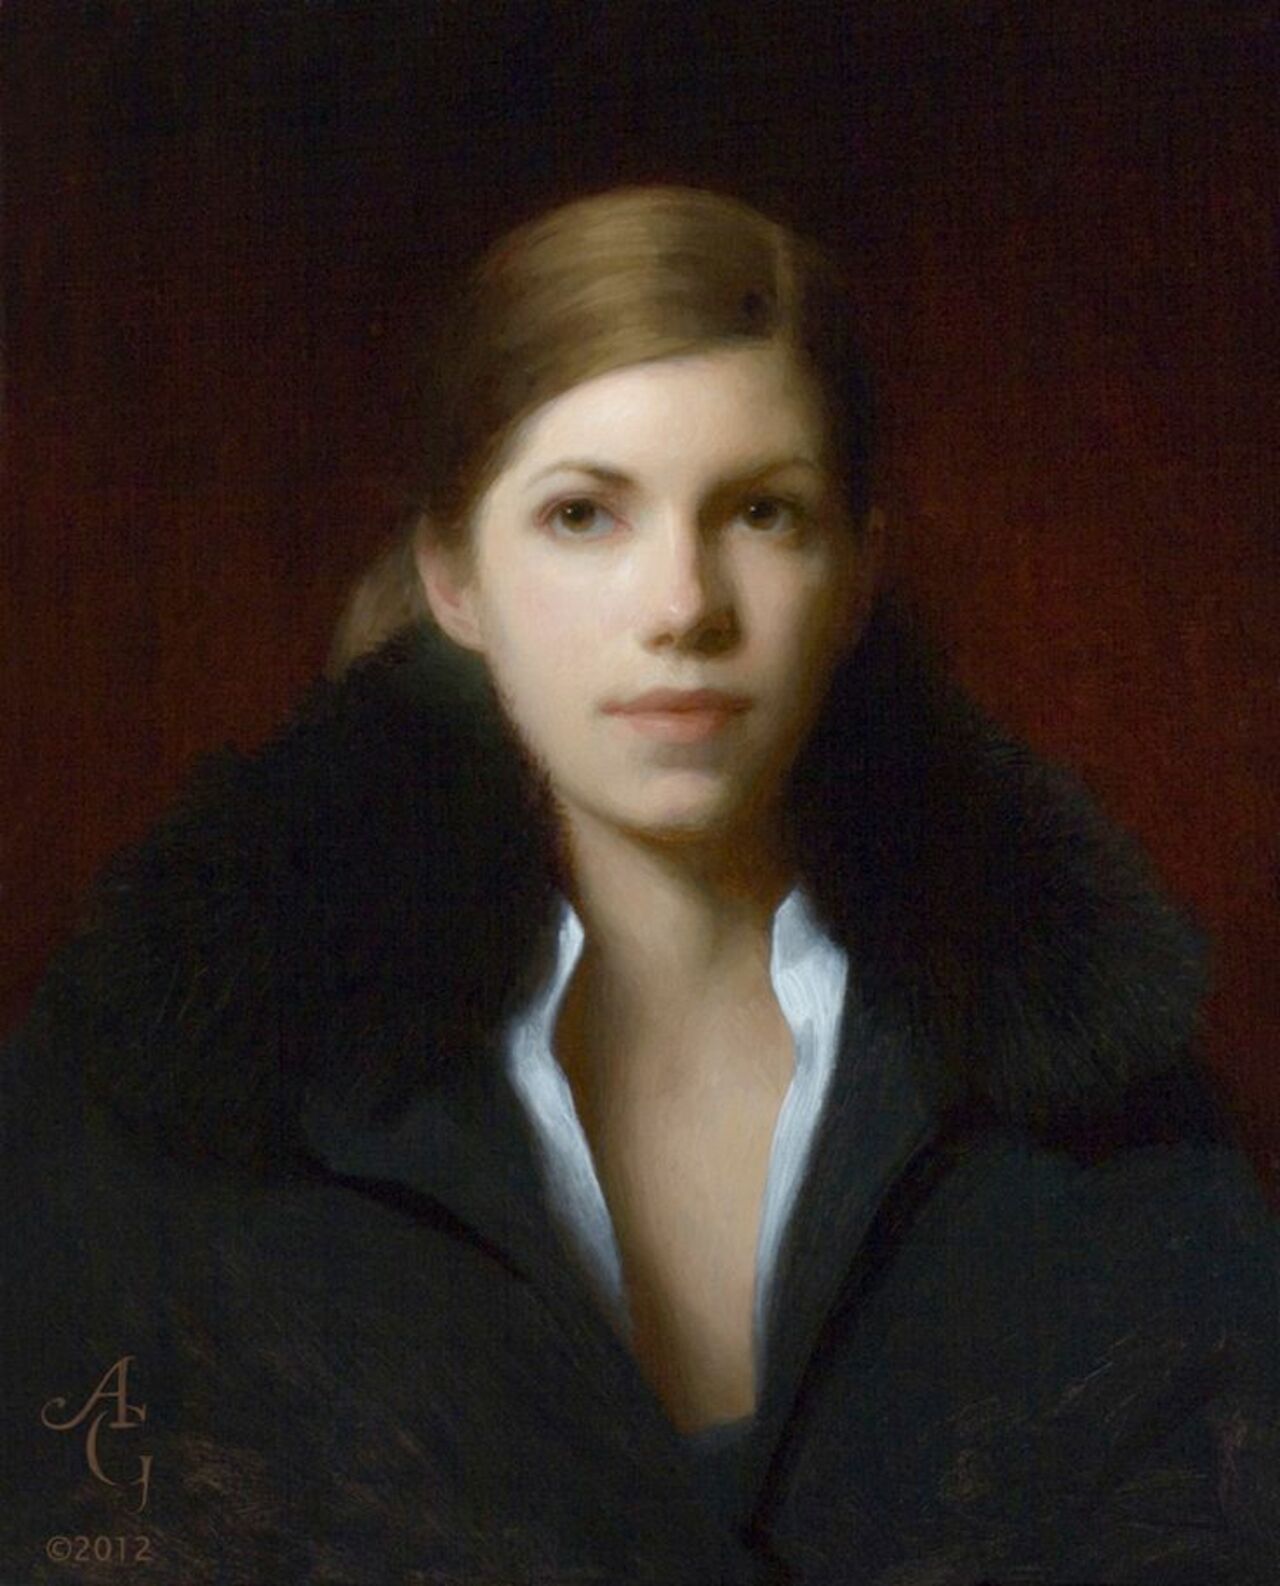 RT @Anabolenaaa: Portrait In Gray - Adrian Gottlieb#TwitLovers #twitart #art #painting https://t.co/X12uoy6ISJ